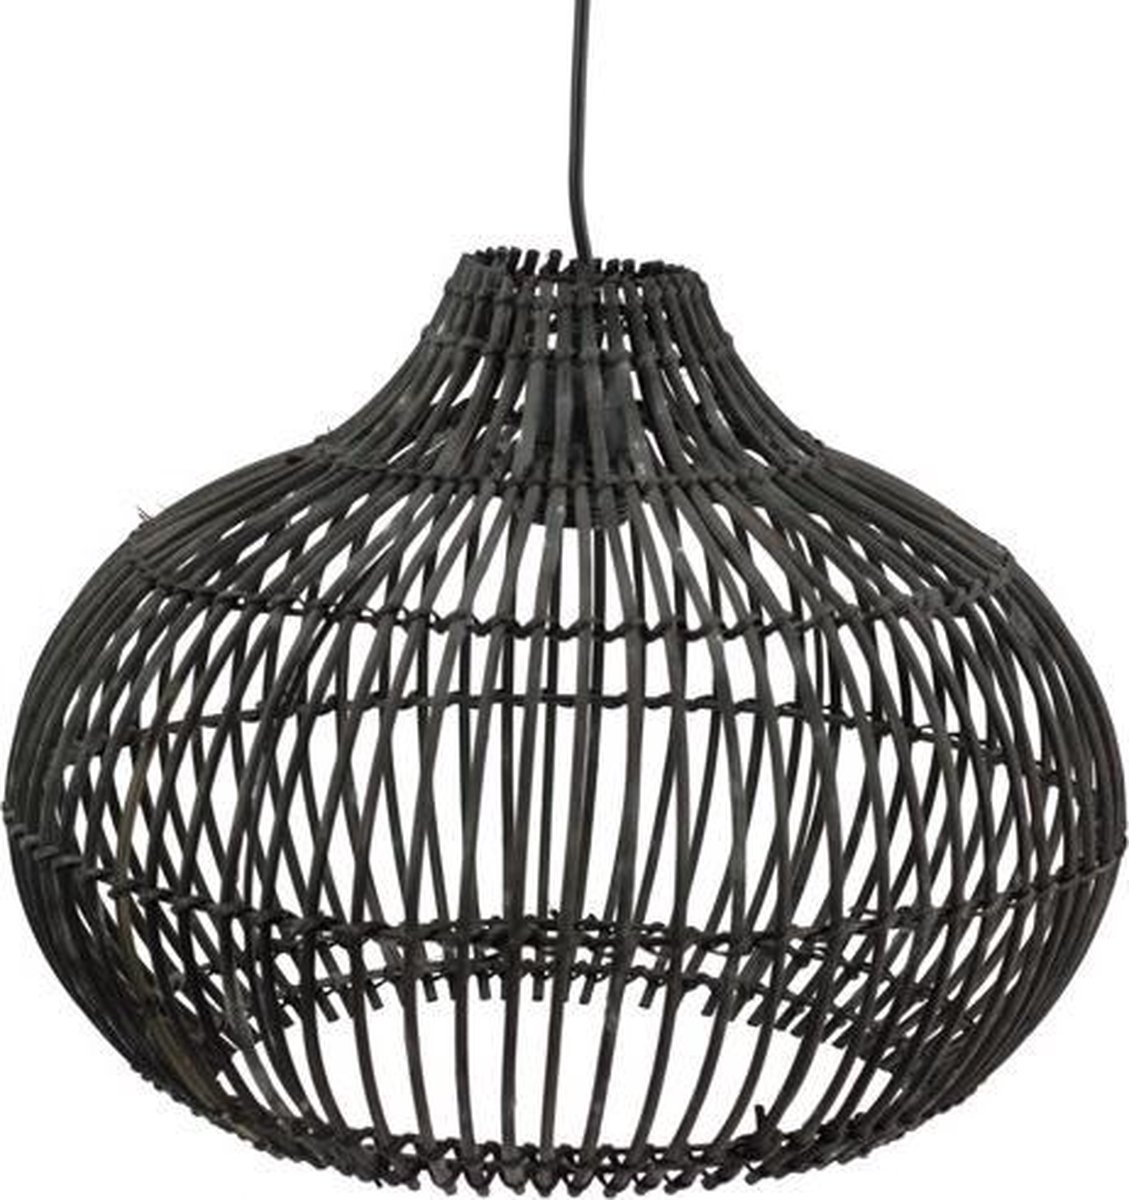 Hanglamp - Hanglamp van Rotan - Slaapkamer Lamp - Keukentafel Lamp - Lamp - Zwart - 39 cm breed